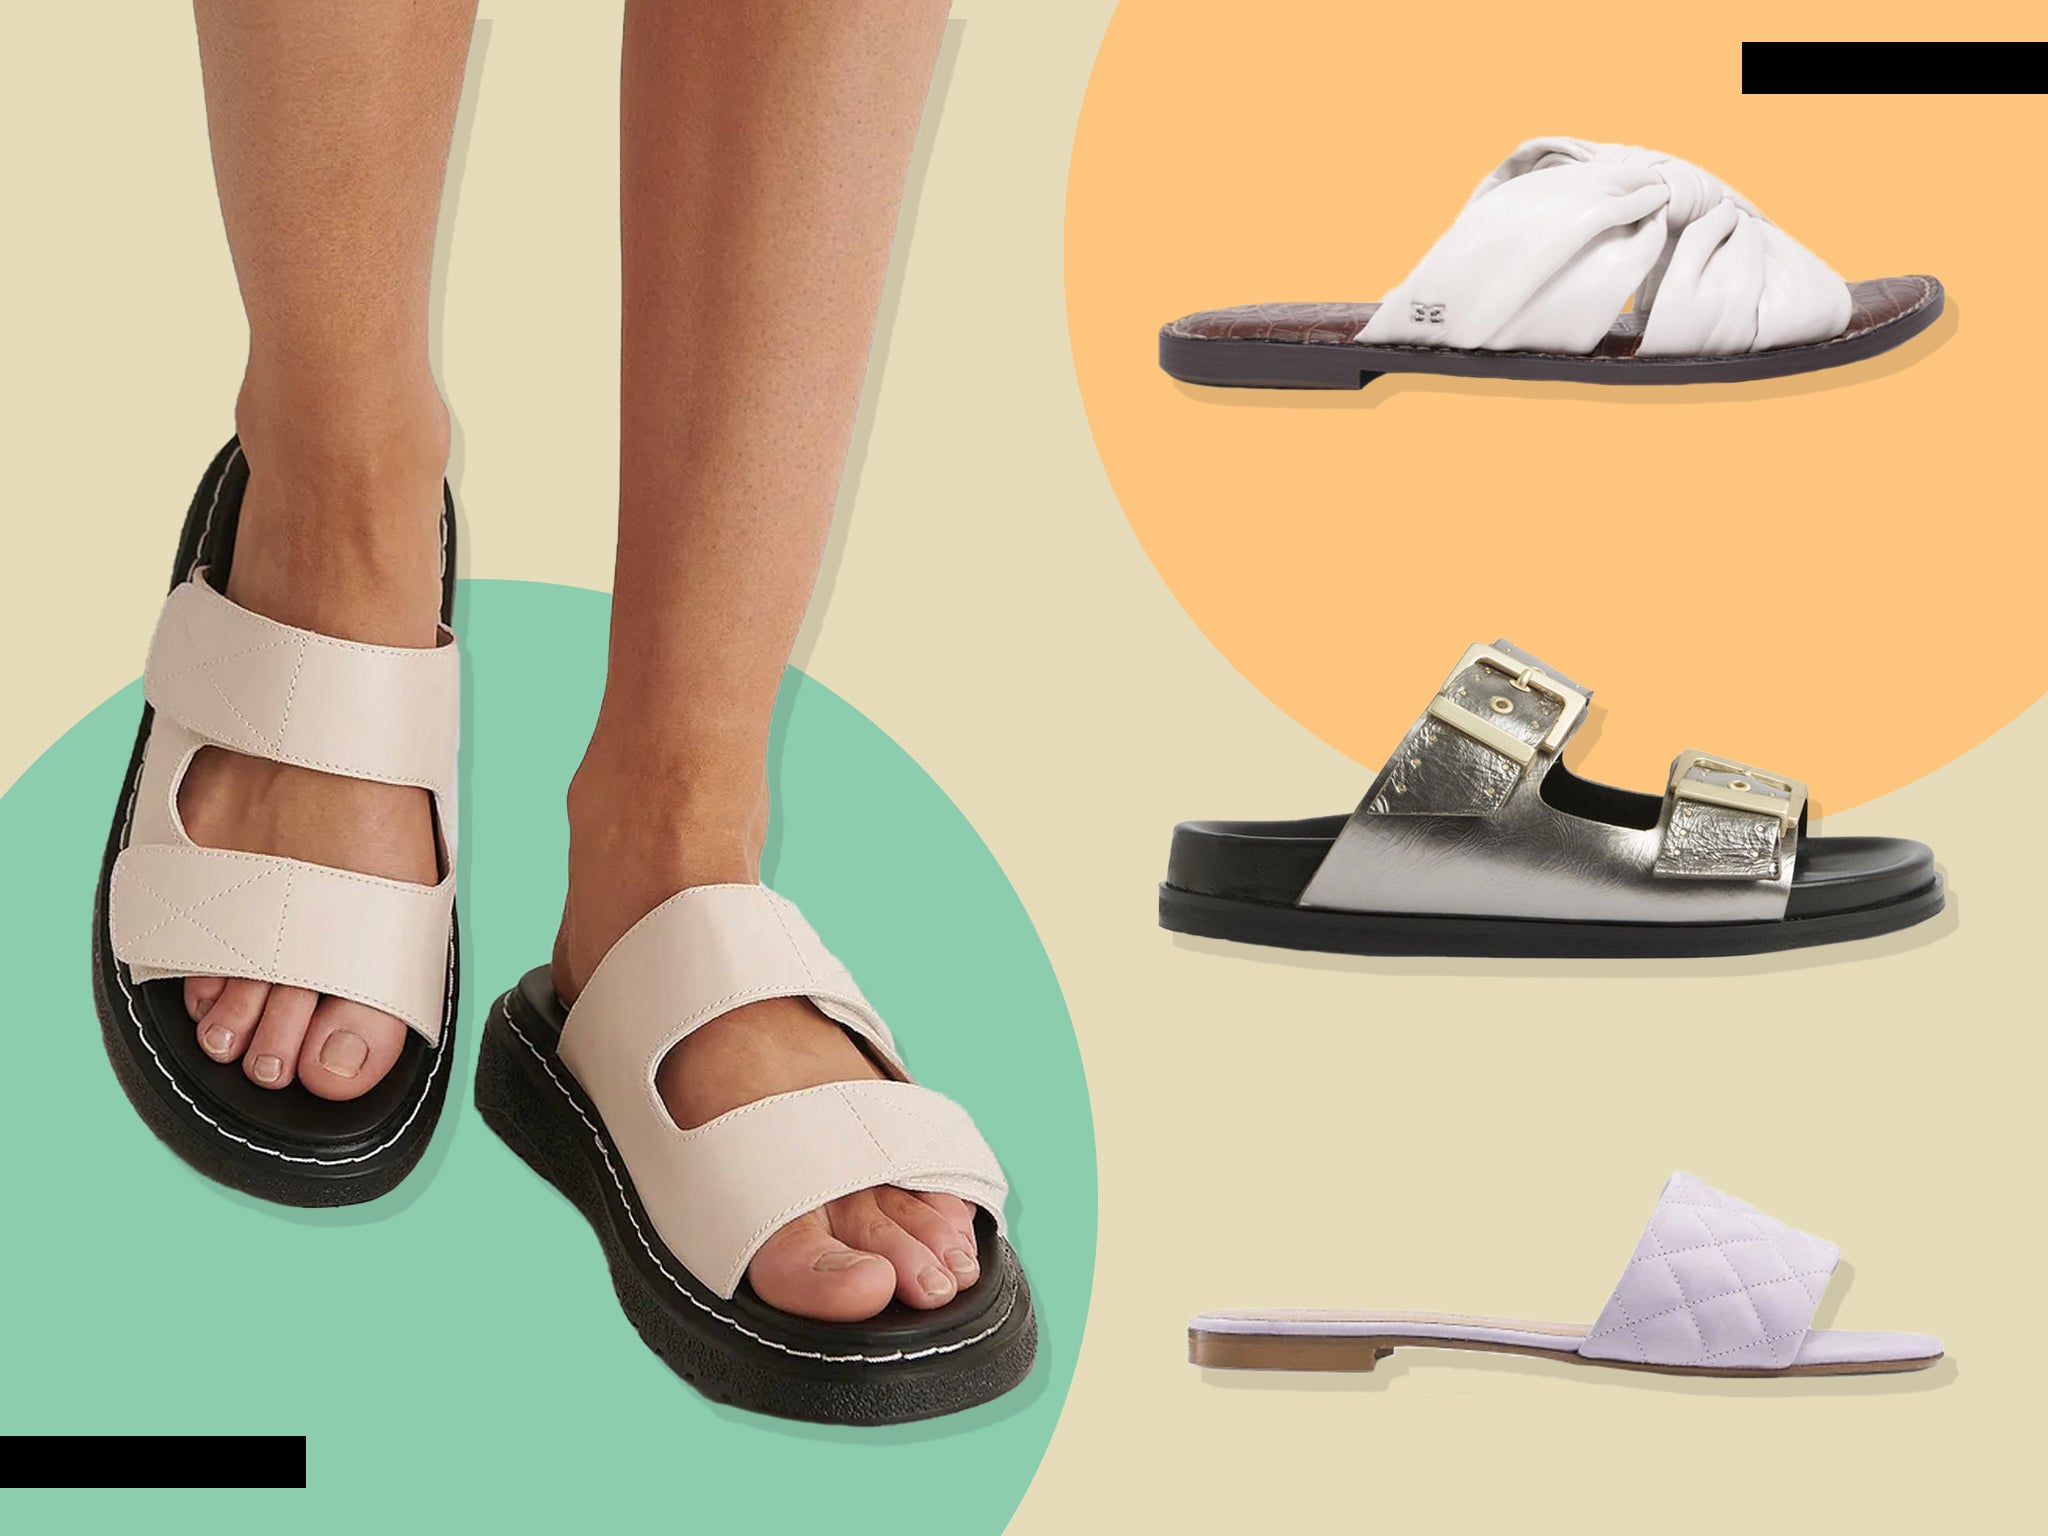 Best summer sandals for women 2021: From flip flops to slides